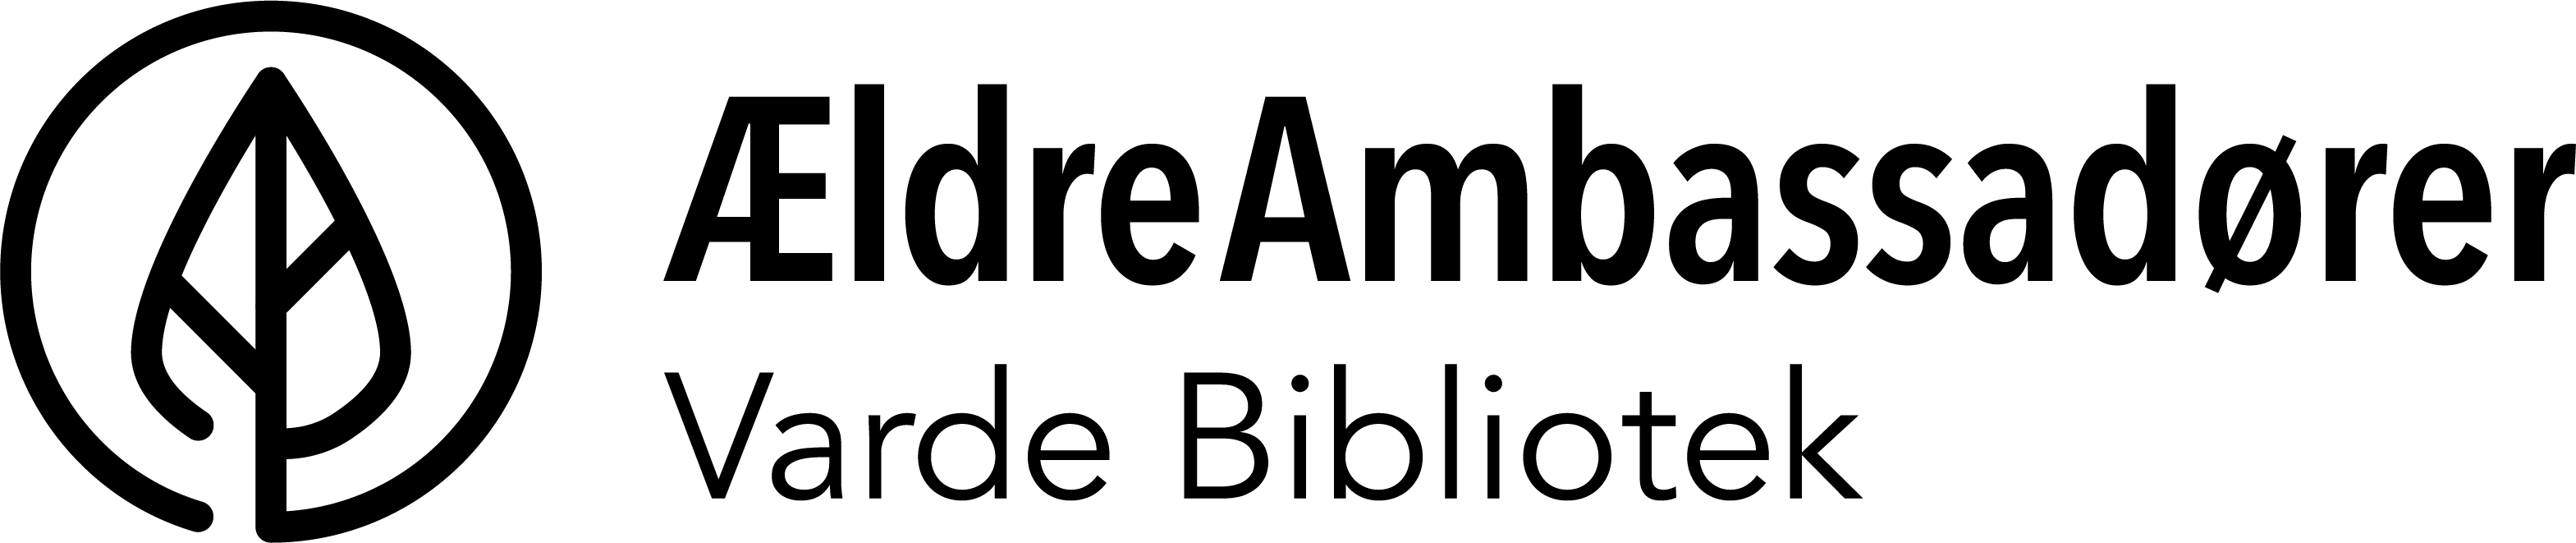 Logo Ældreambassadører Varde